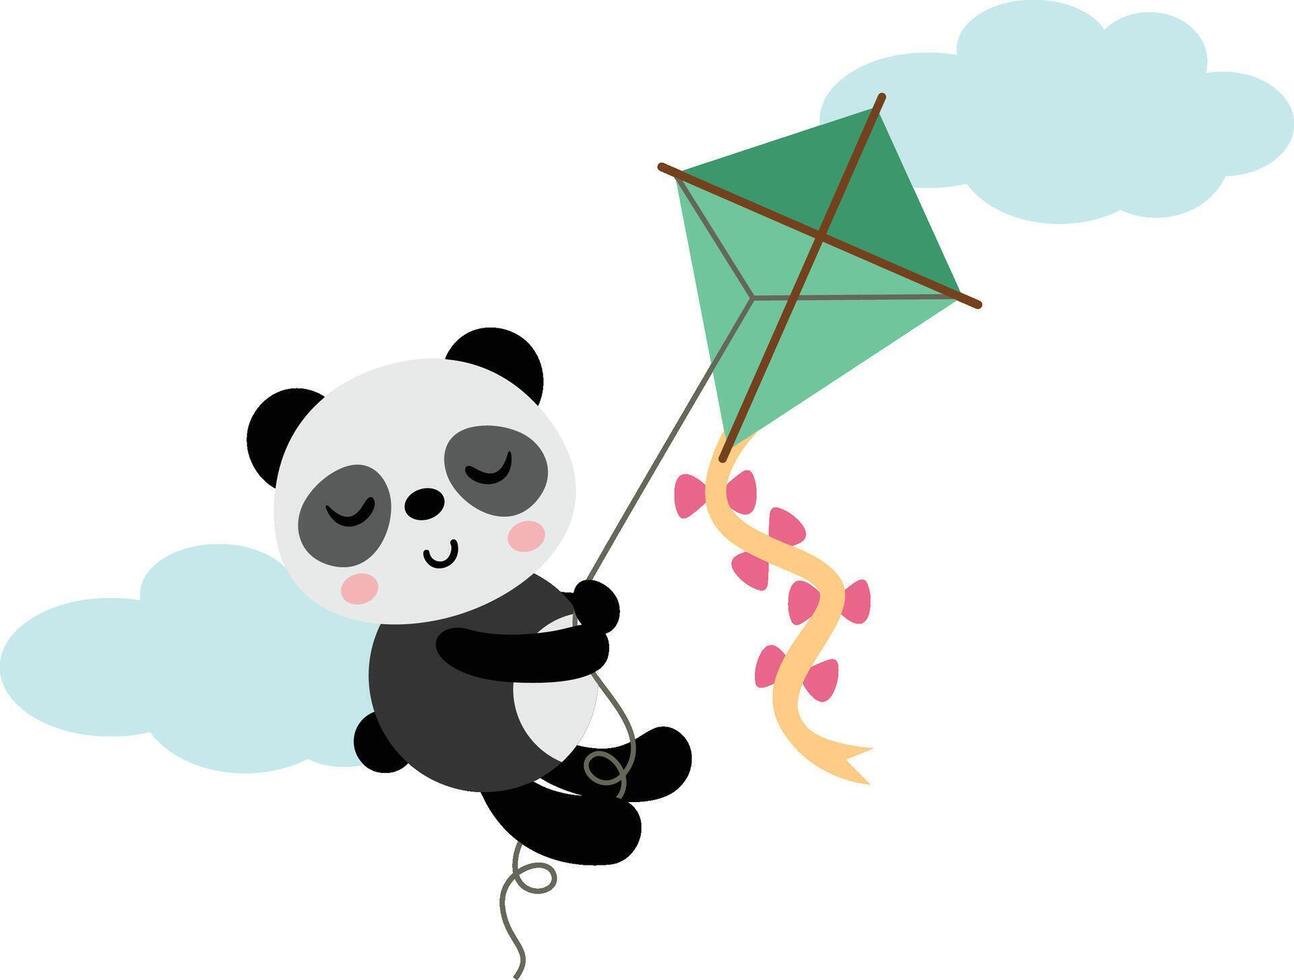 Cute panda flying with kite vector